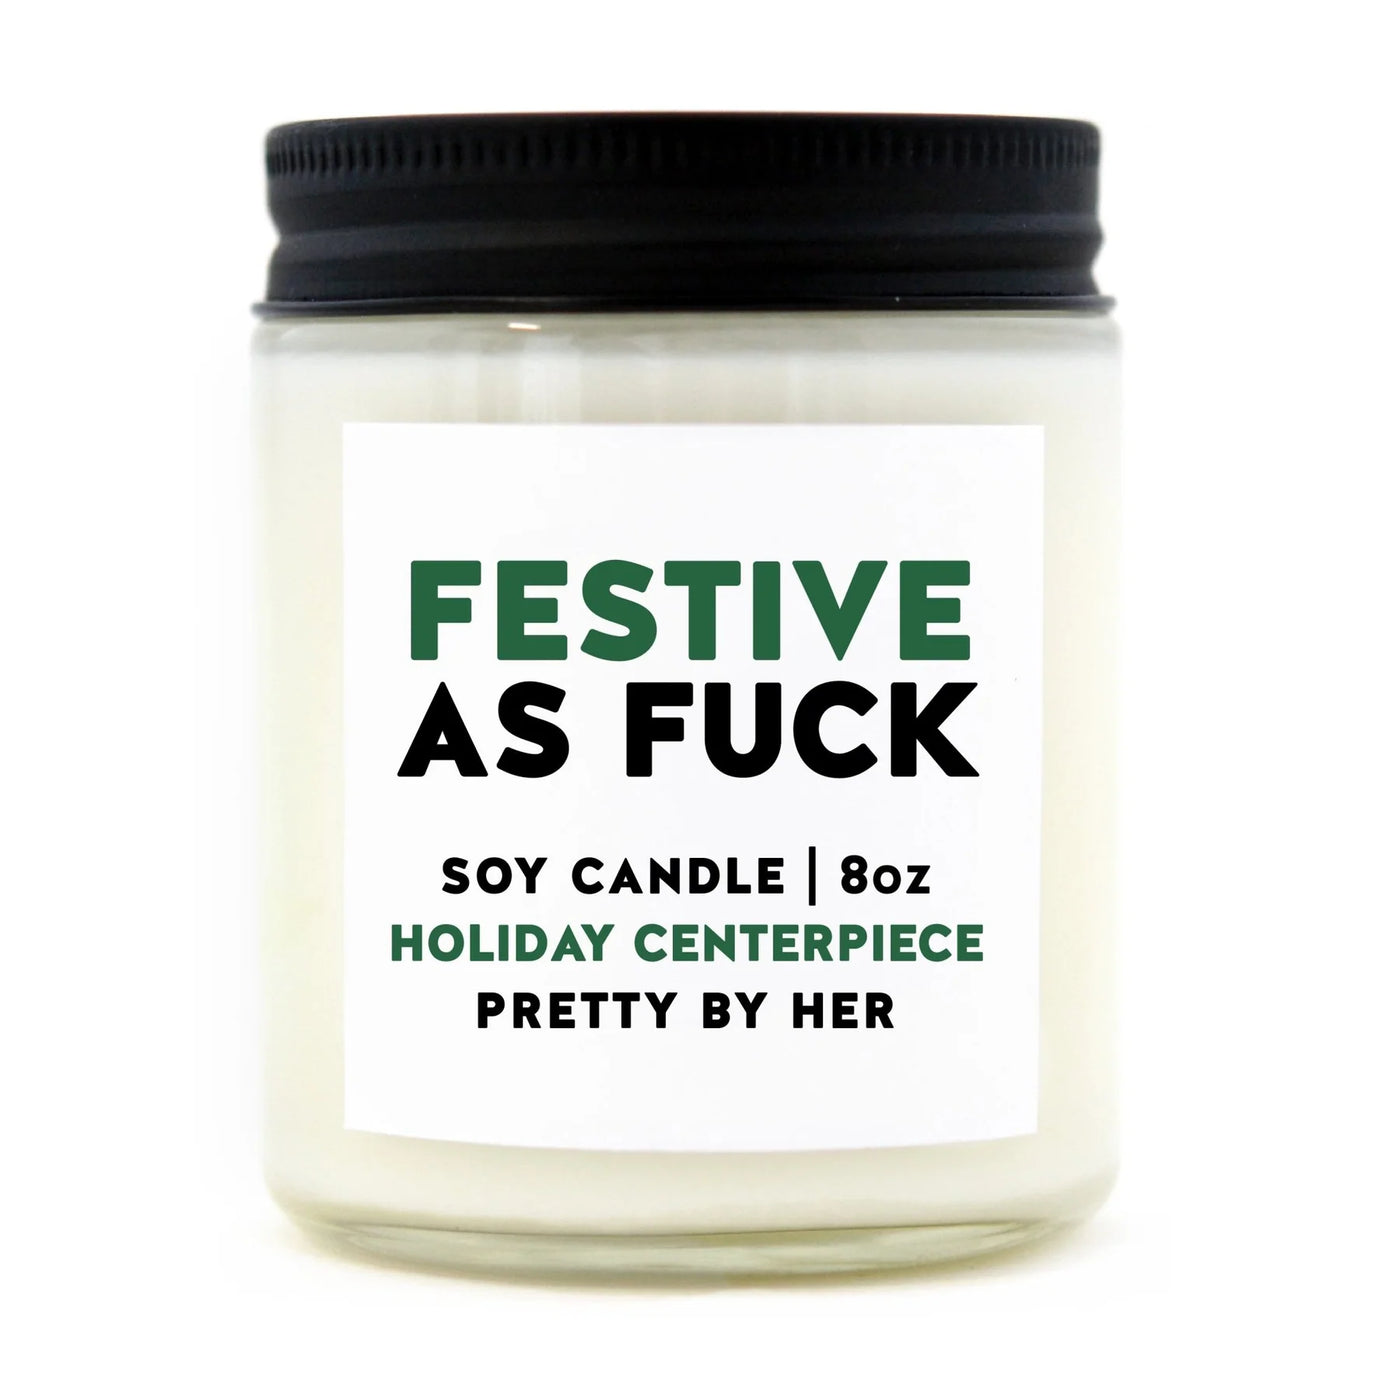 Festive as Fuck Candle